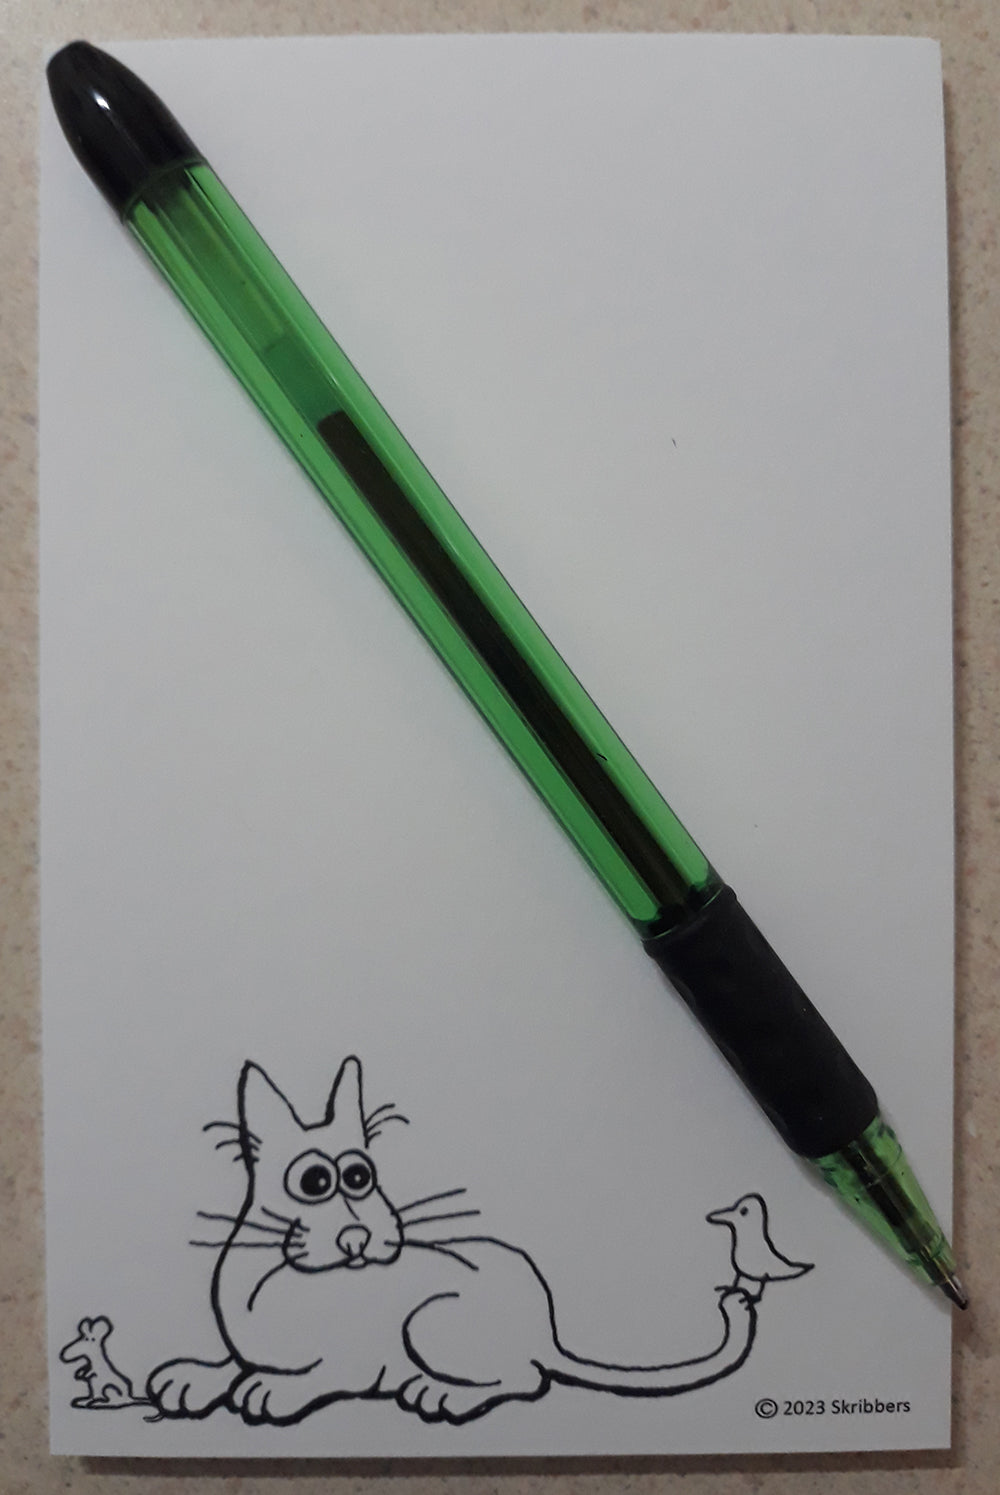 Cat ScribblePad